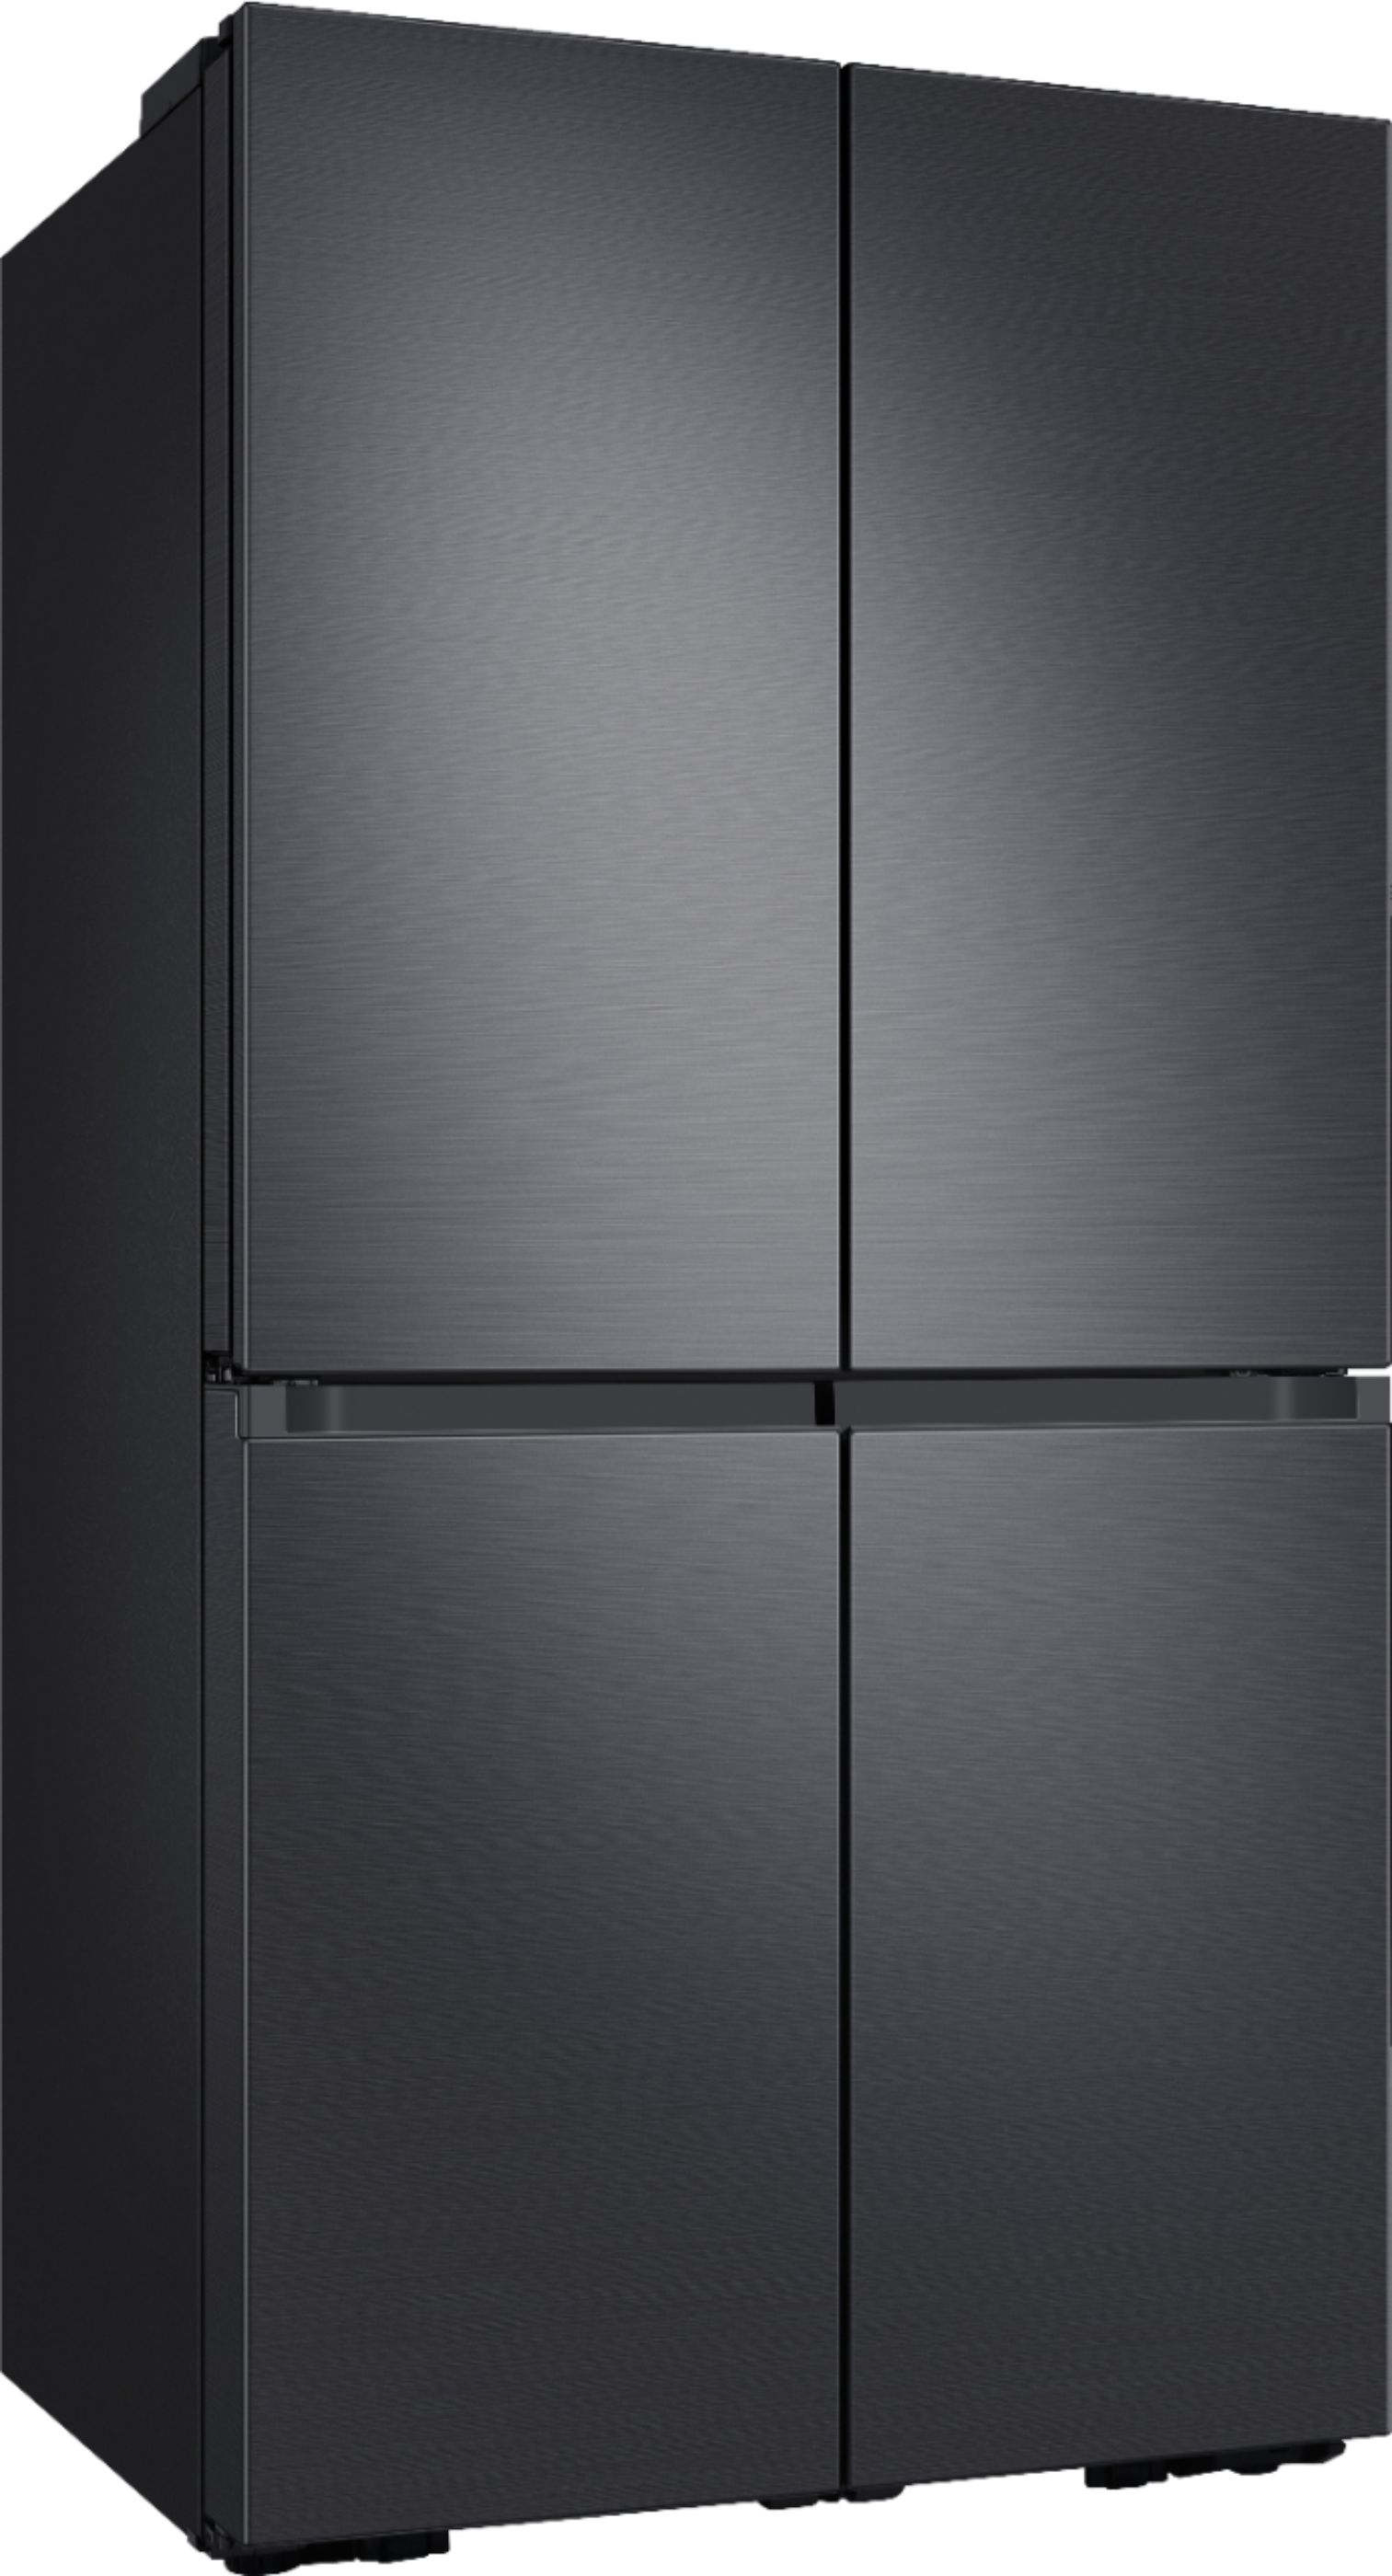 Left View: Samsung - Bespoke 23 cu. ft. Counter Depth 4-Door French Door Refrigerator with AutoFill Water Pitcher - Stainless steel